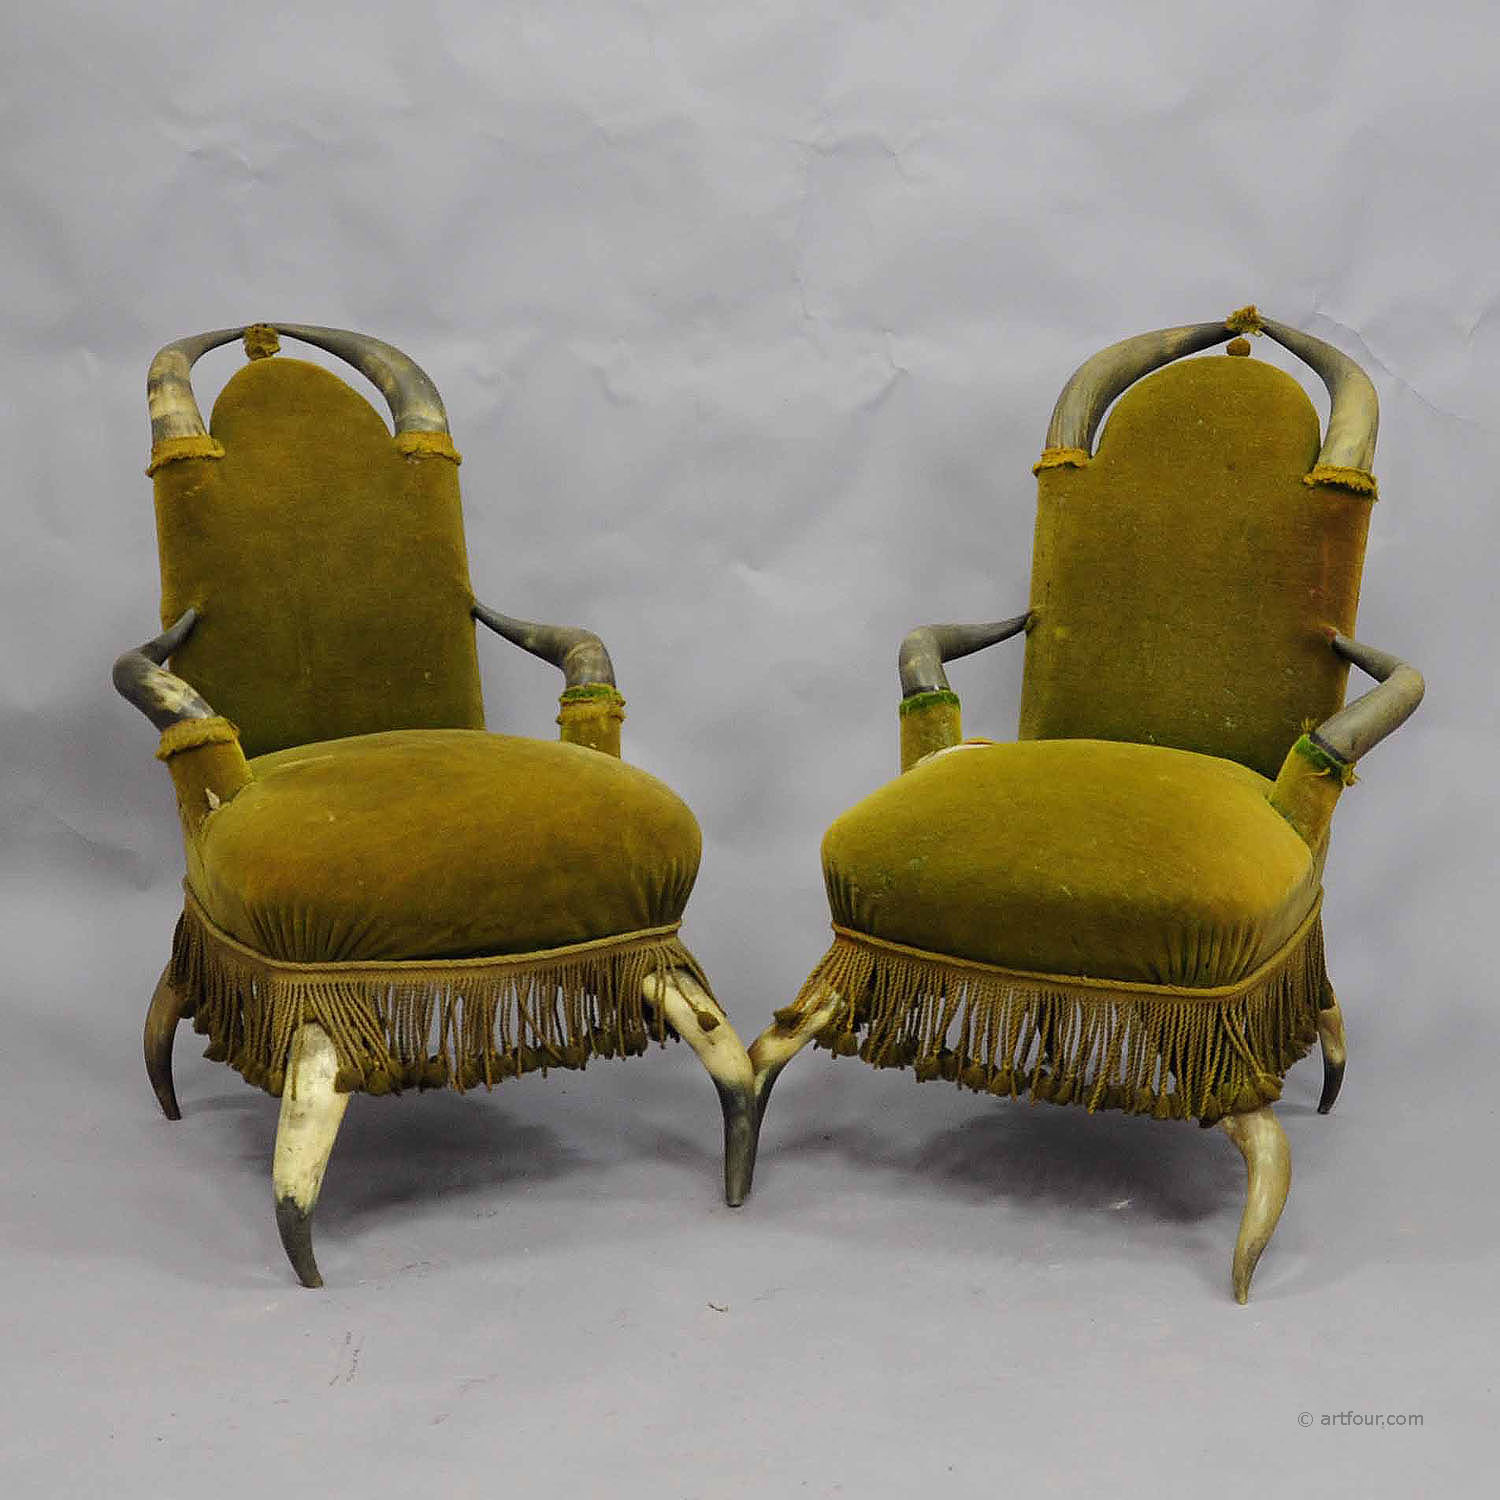 Four Antique Bull Horn Chairs ca. 1870